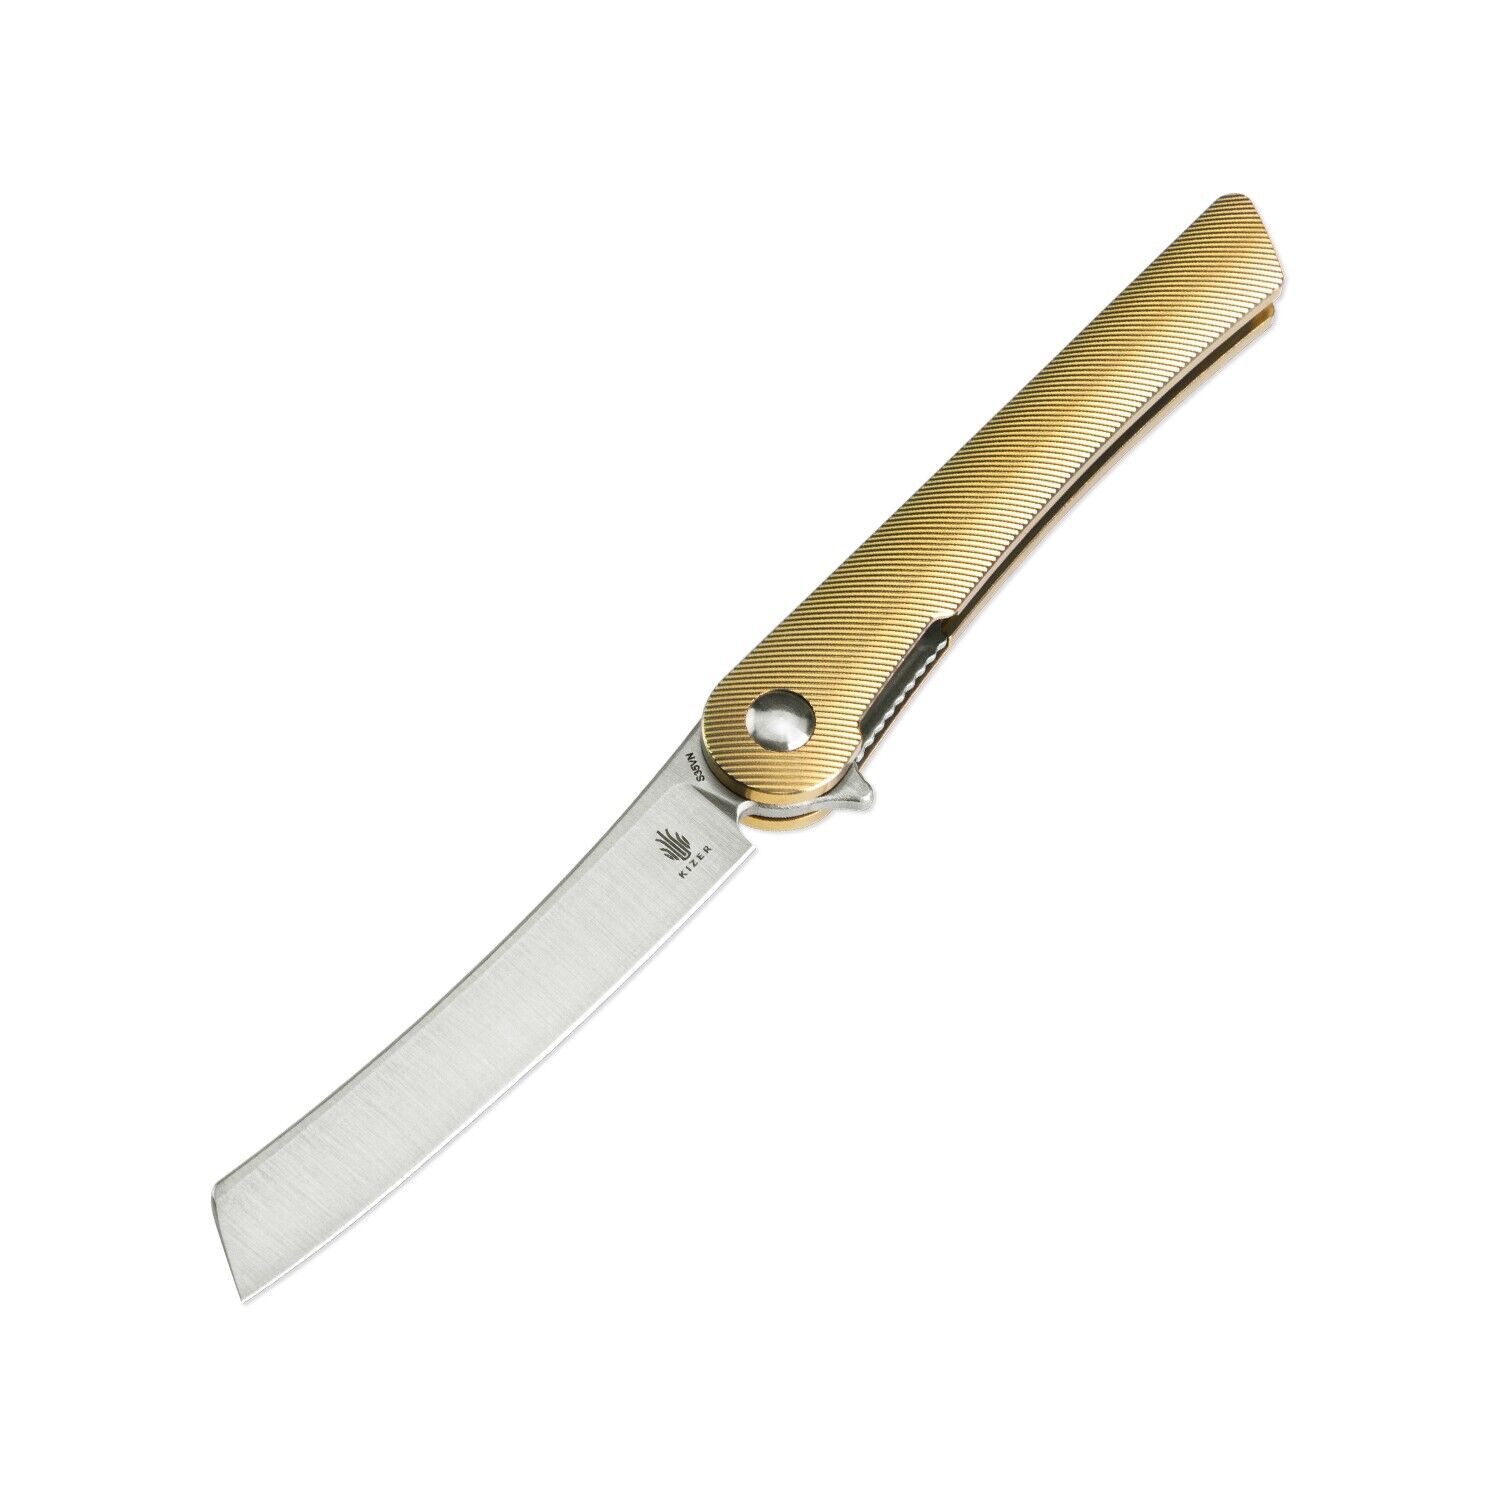 Kizer Mercury Gold Pocket Knife, S35VN Steel Blade, Titanium Handle, Ki3645A1